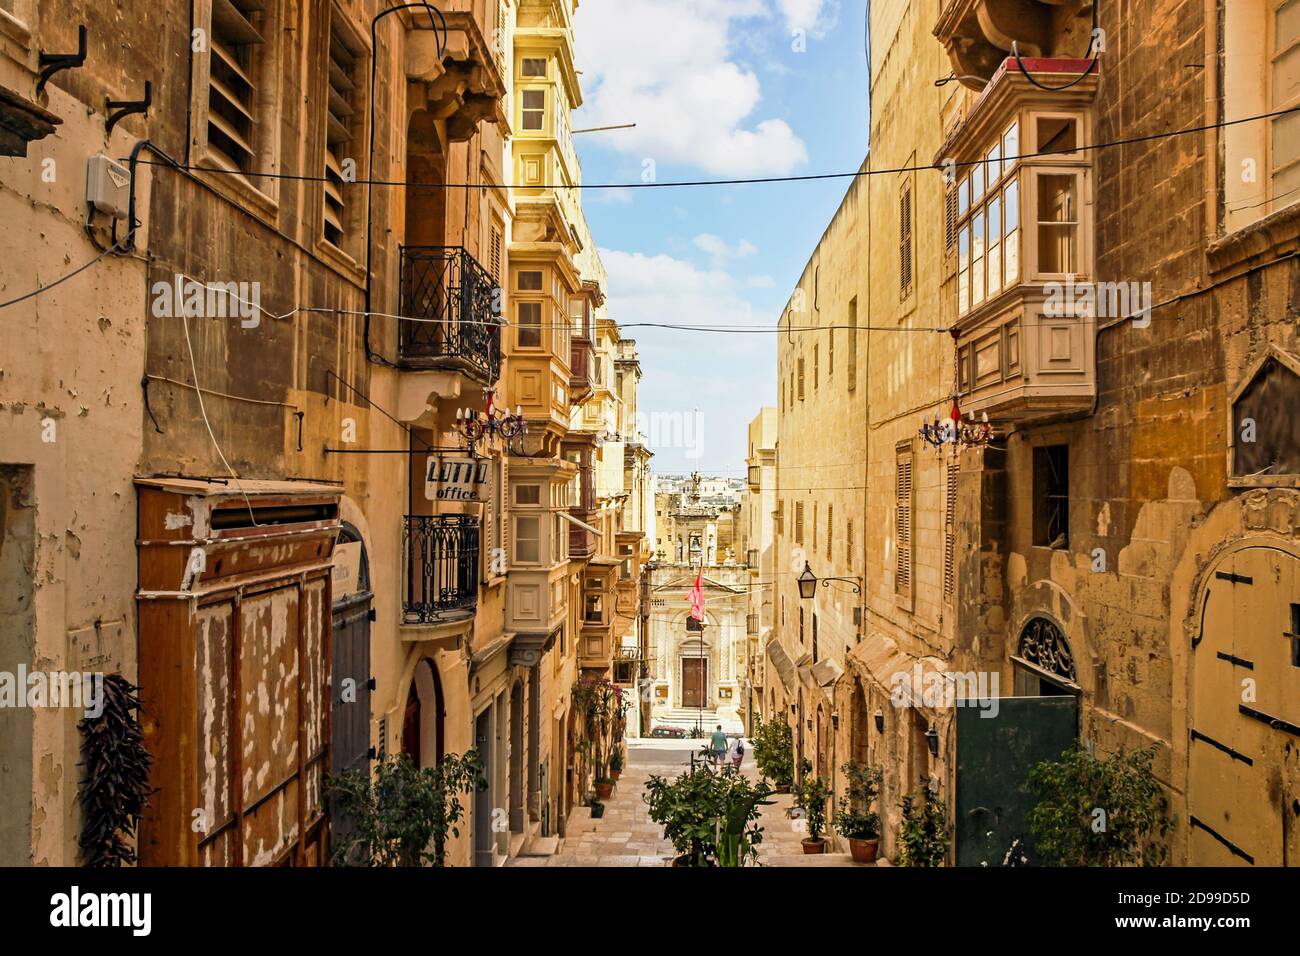 street view of old limestone buildings in valletta Malta Stock Photo